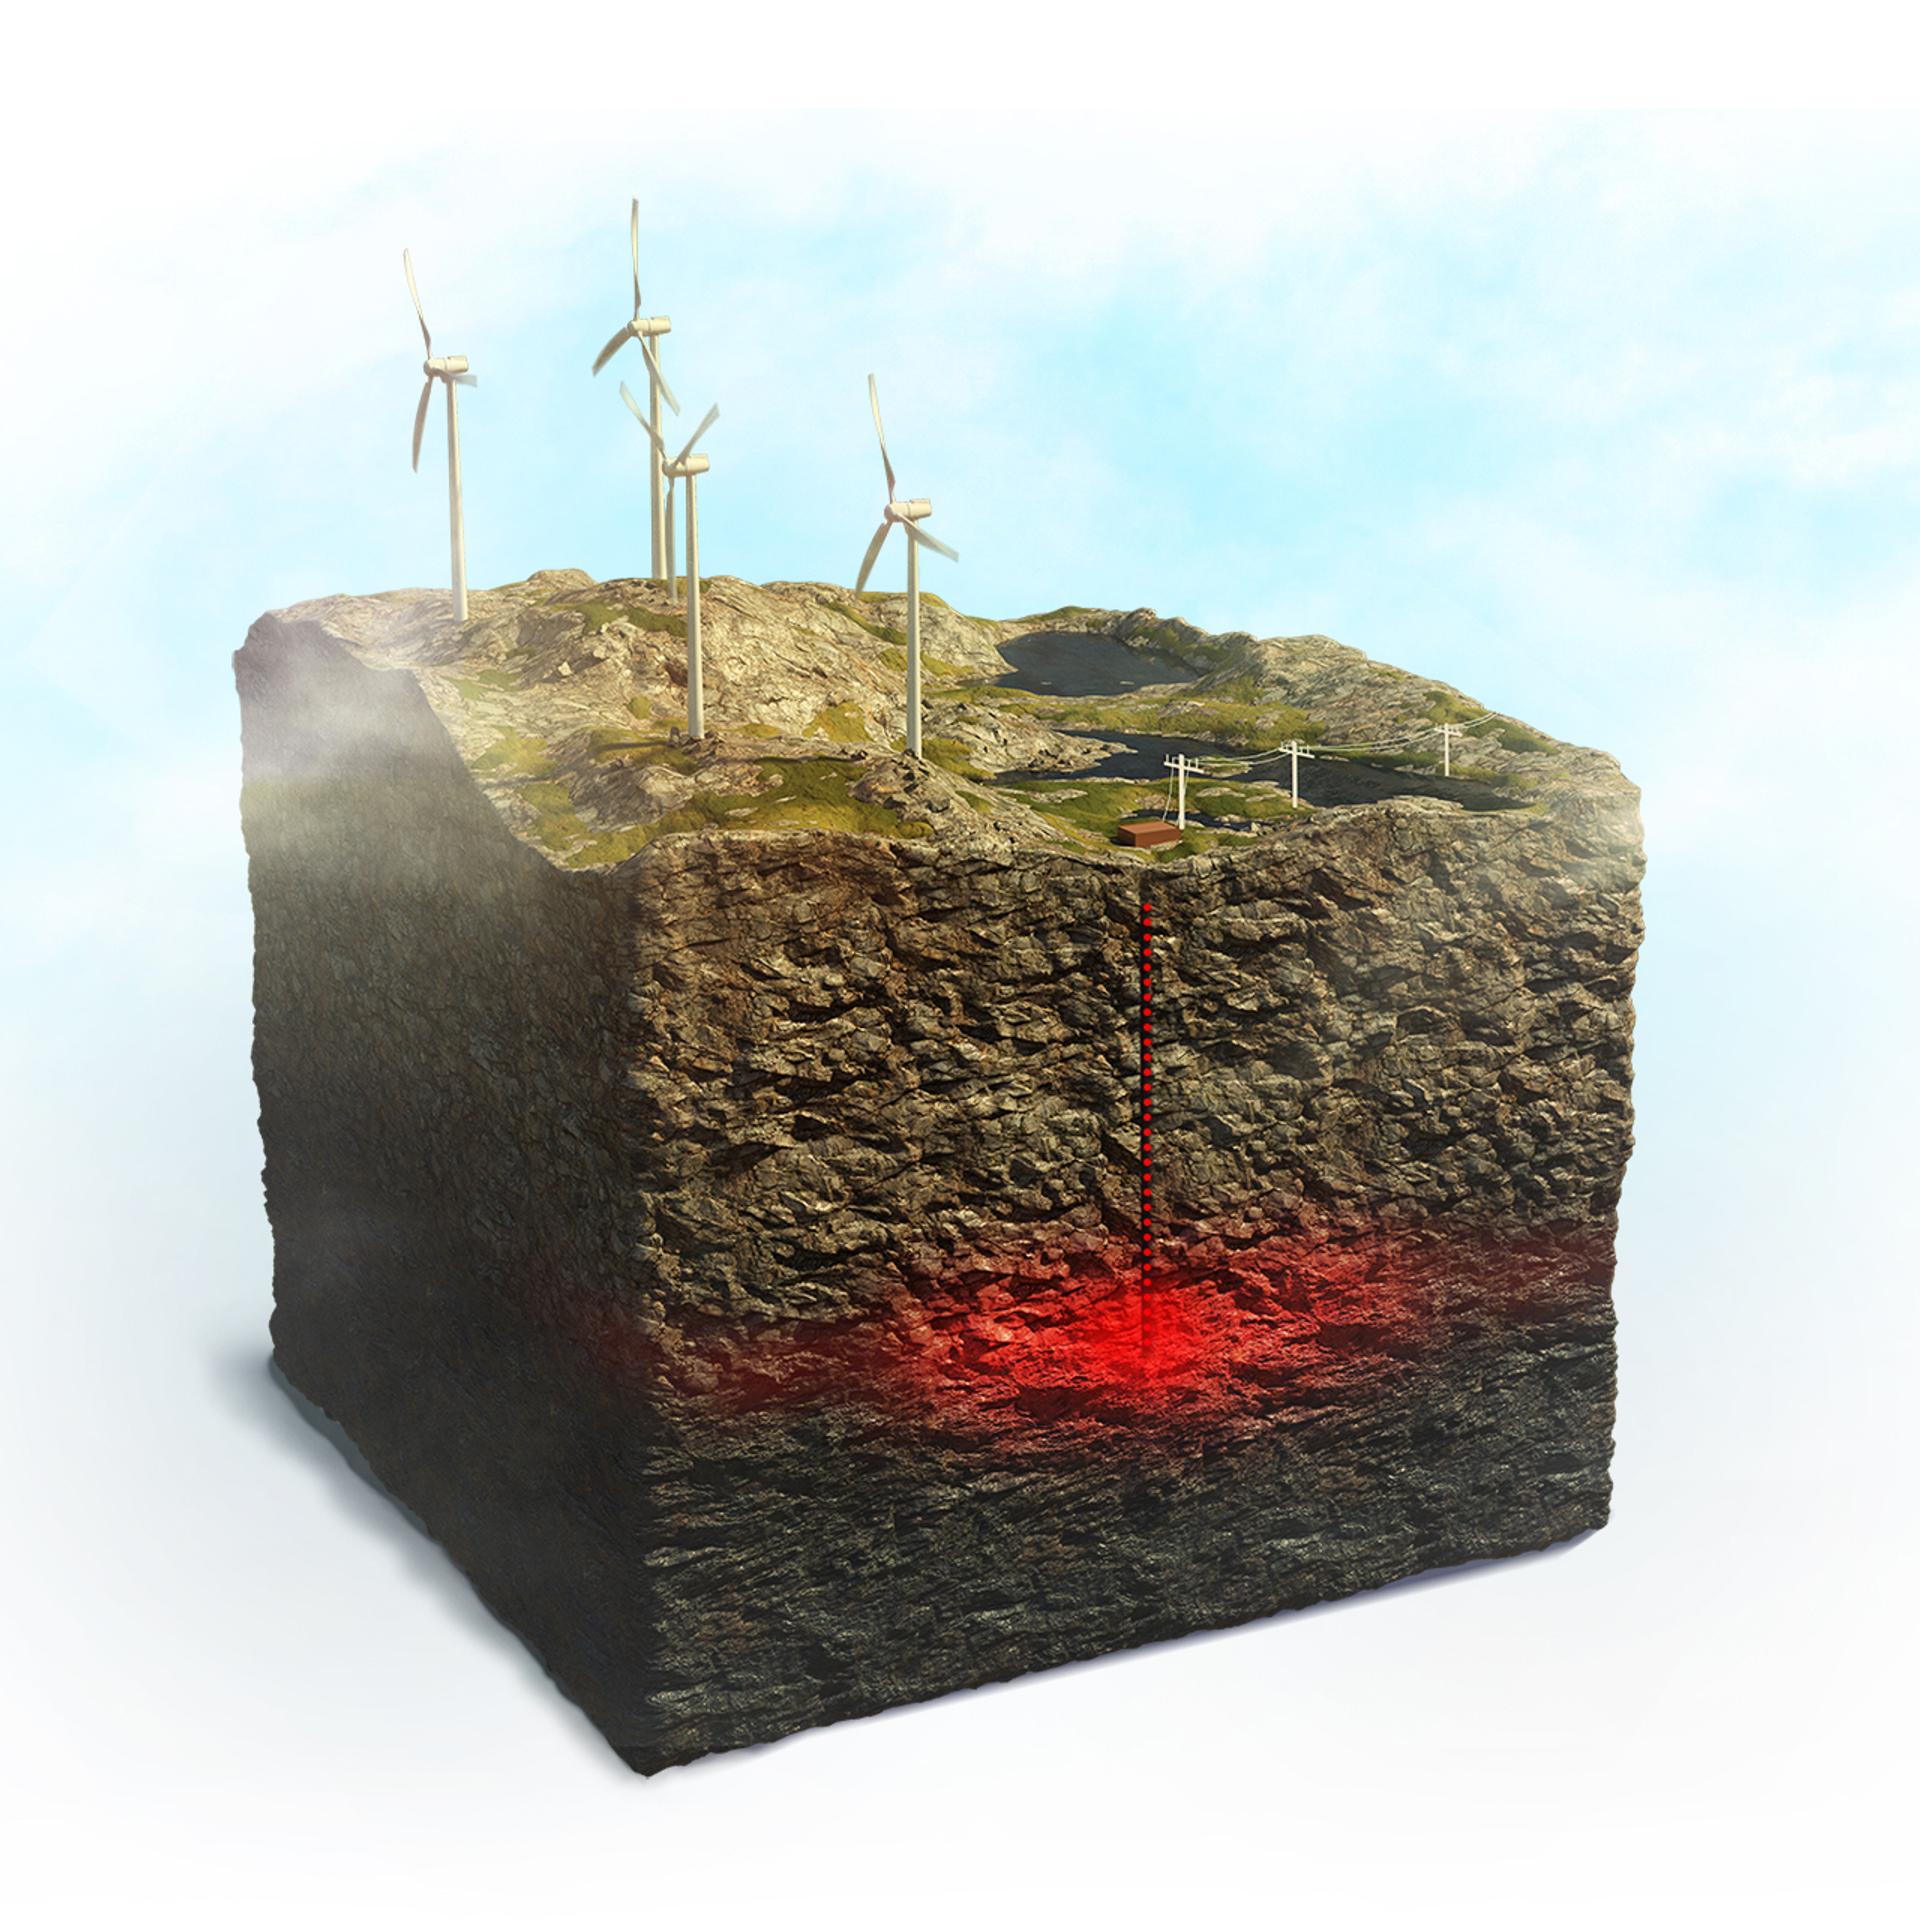 Illustration of underground energy storage from wind turbines